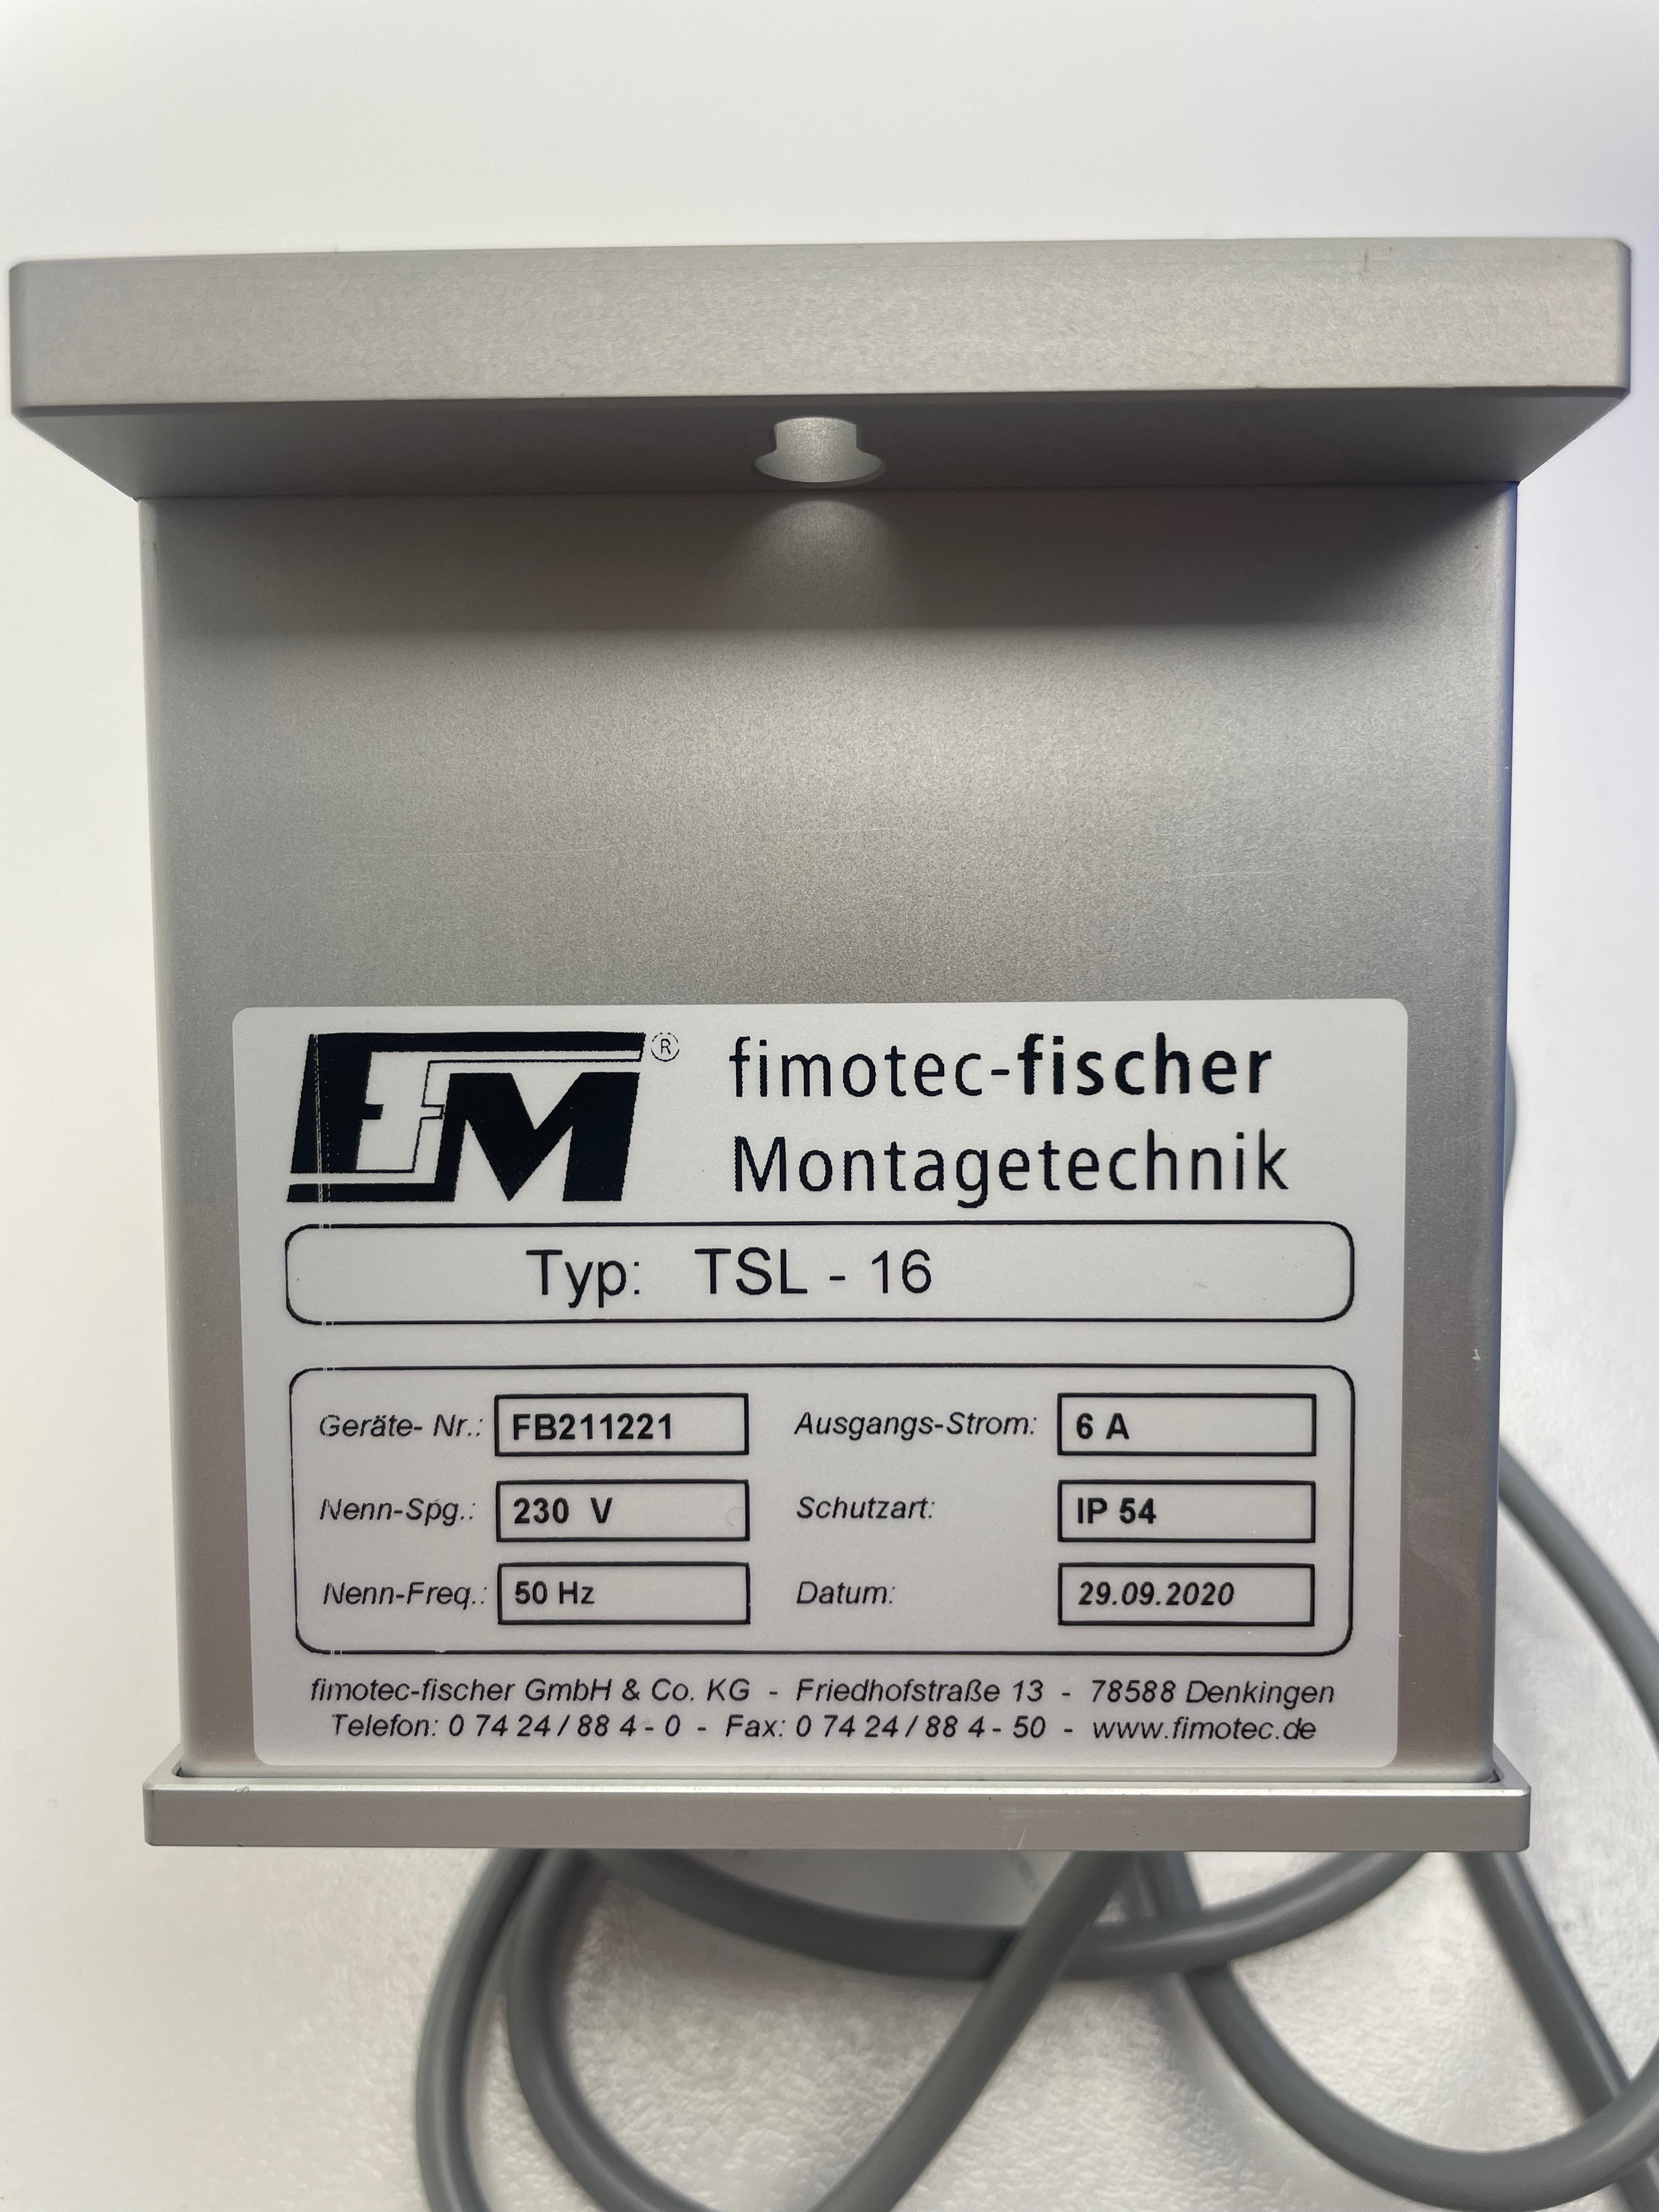 Fimotec-fischer Montagetechnik Phasenanschnittsteuergerät TSL-16